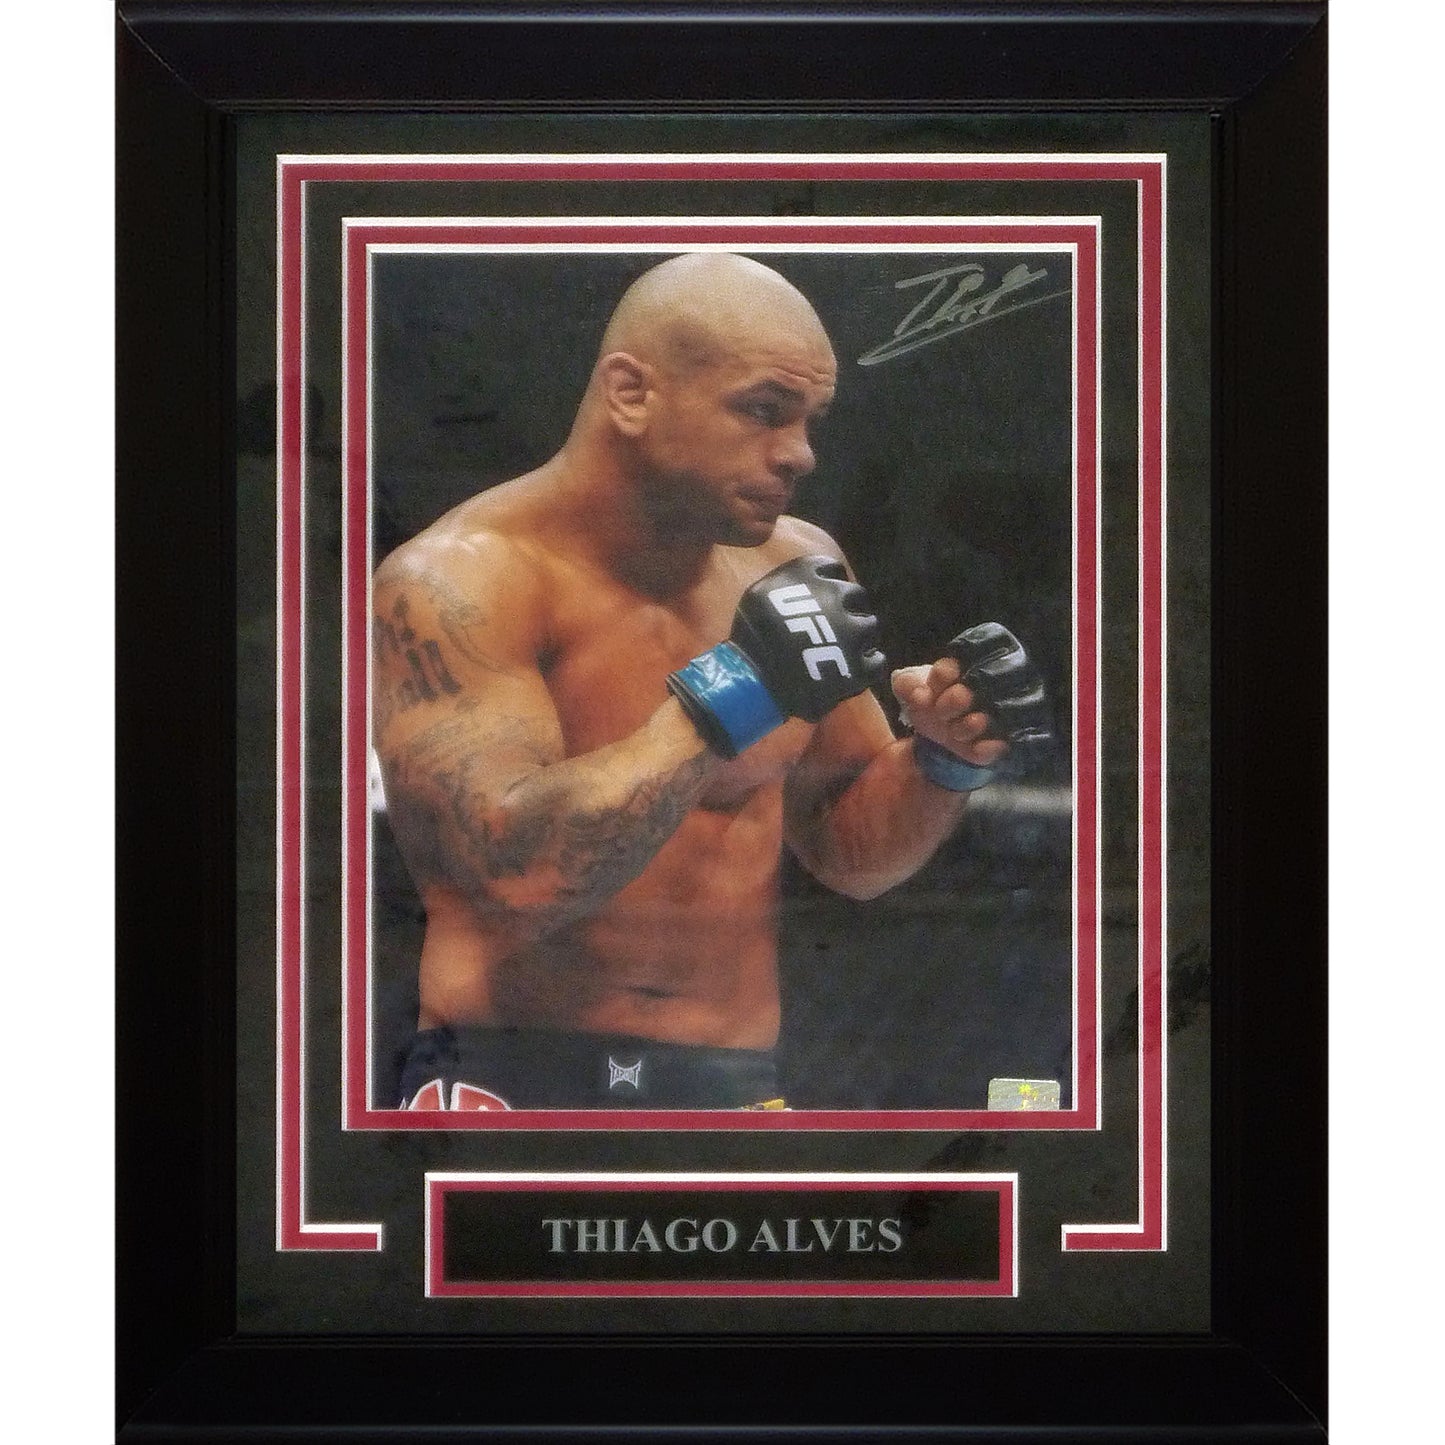 Thiago Alves Autographed MMA UFC Deluxe Framed 8x10 Photo